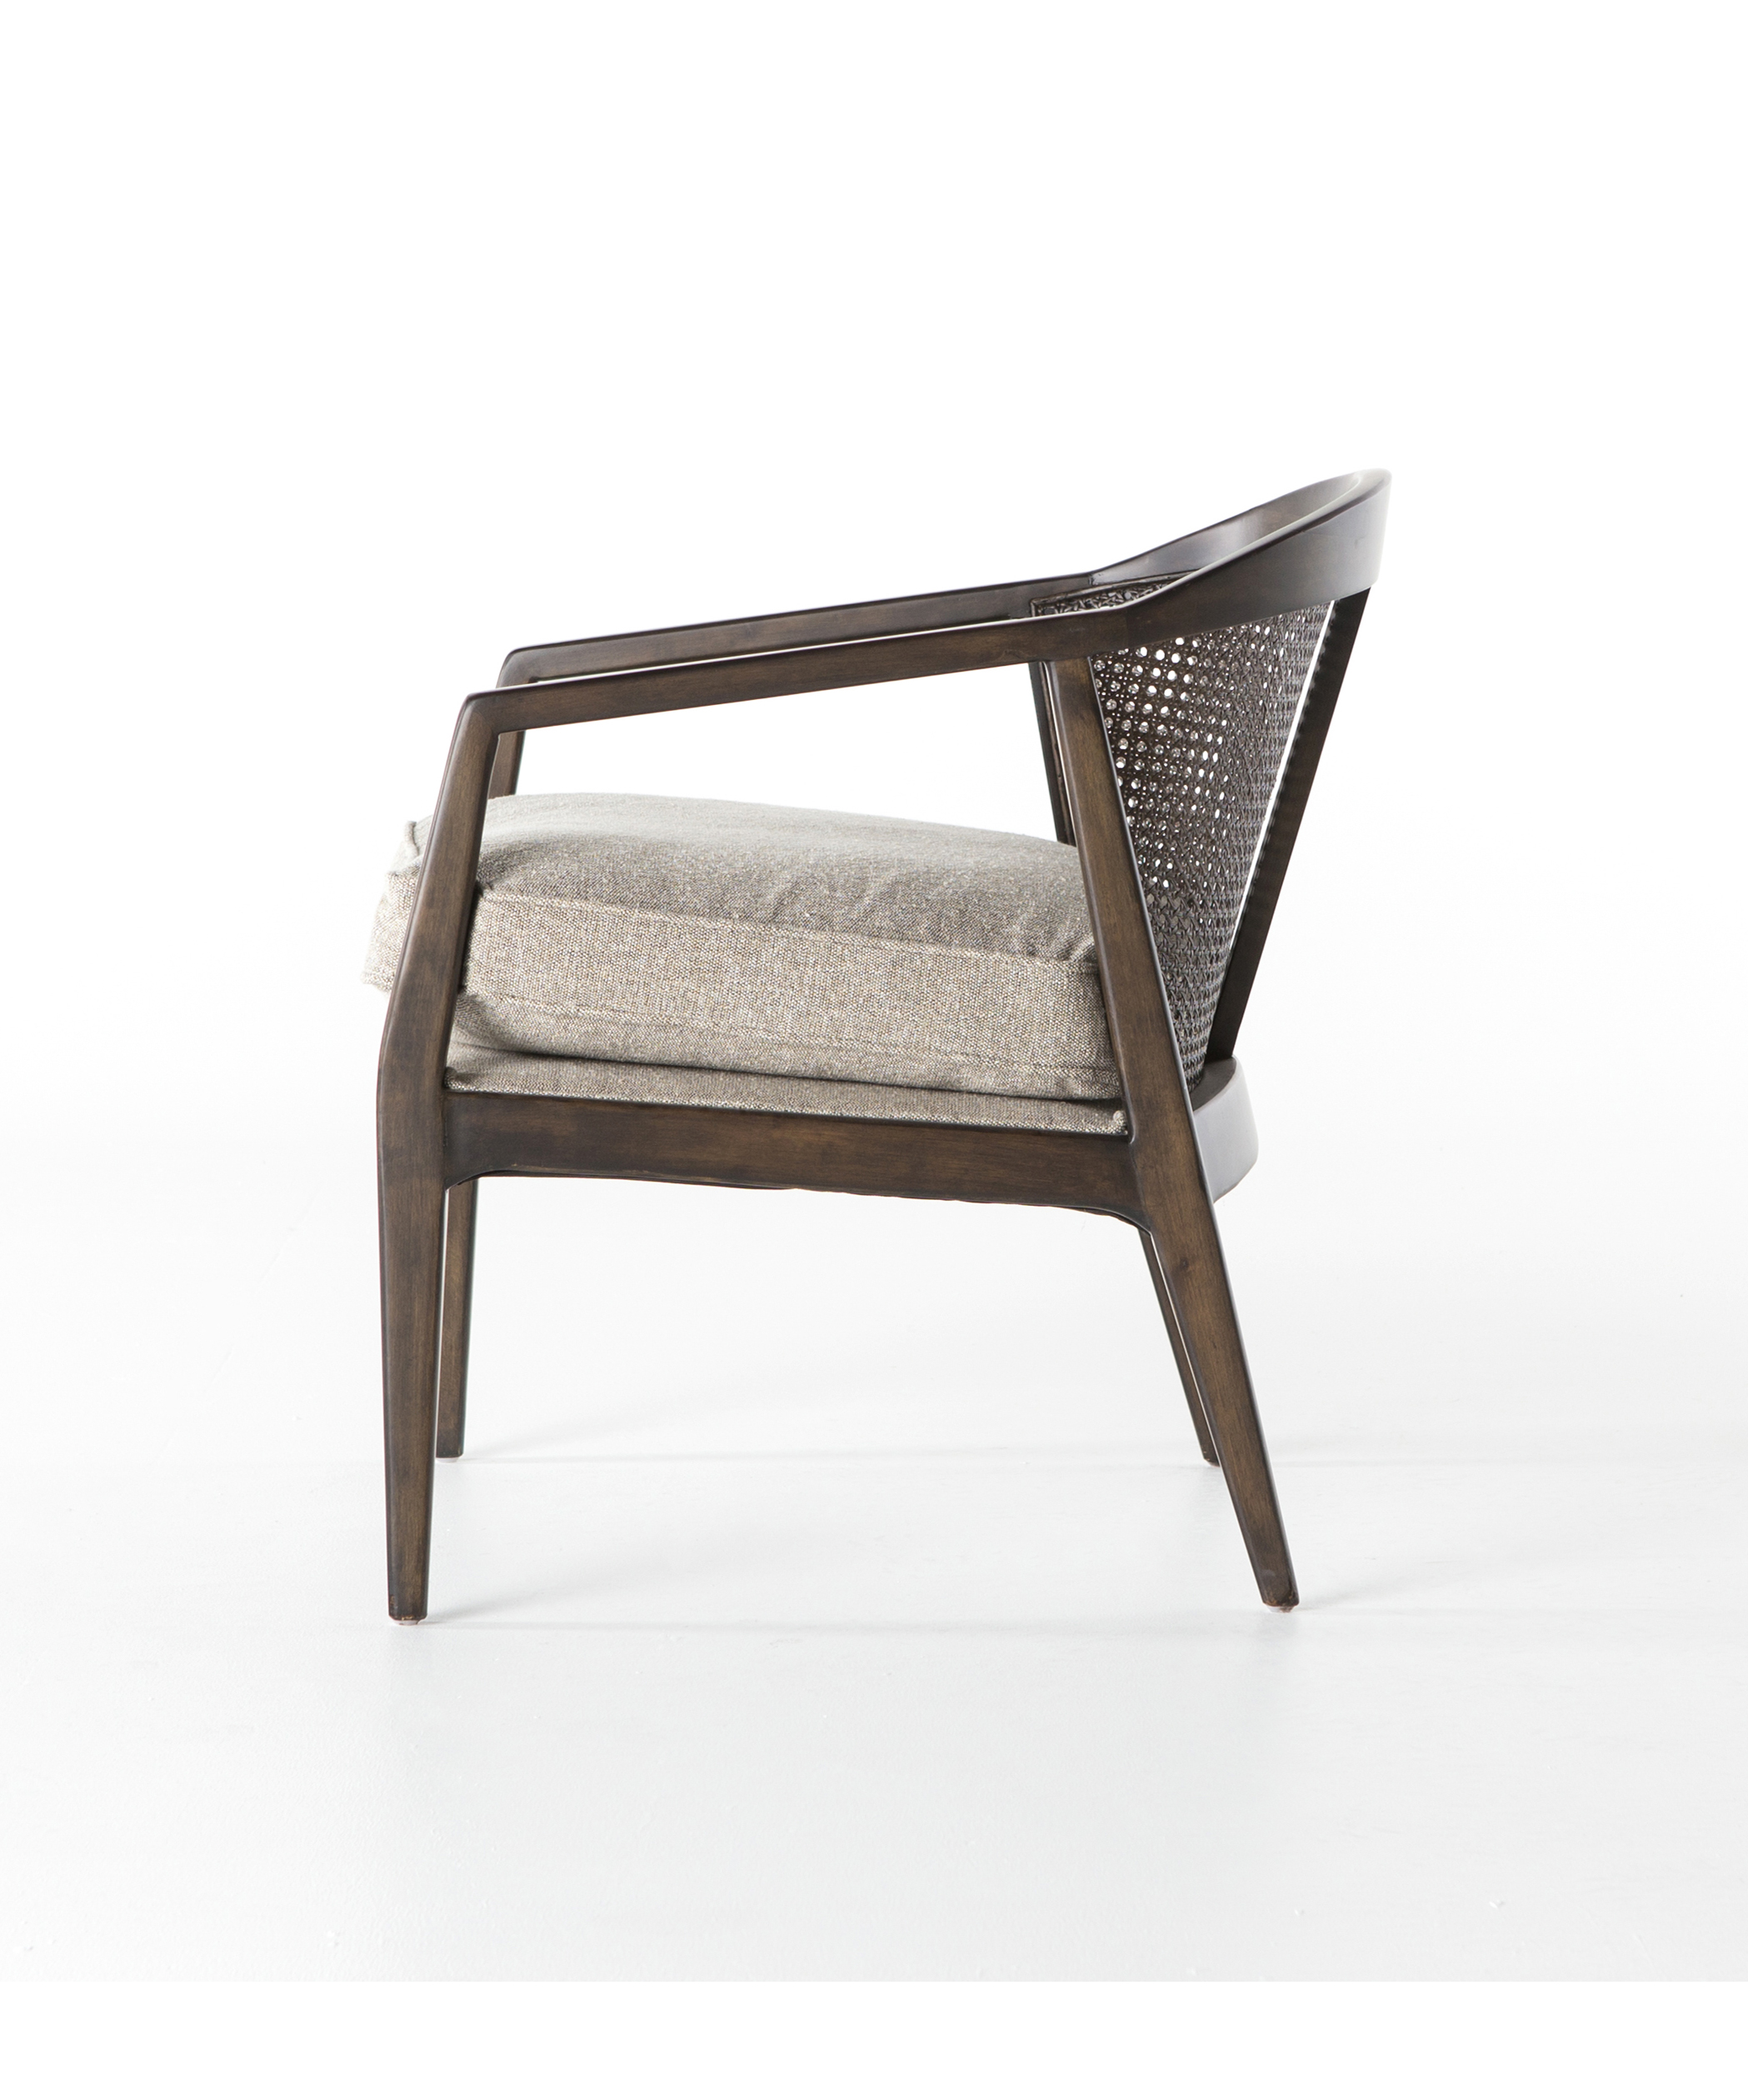 Woven Rattan Chair